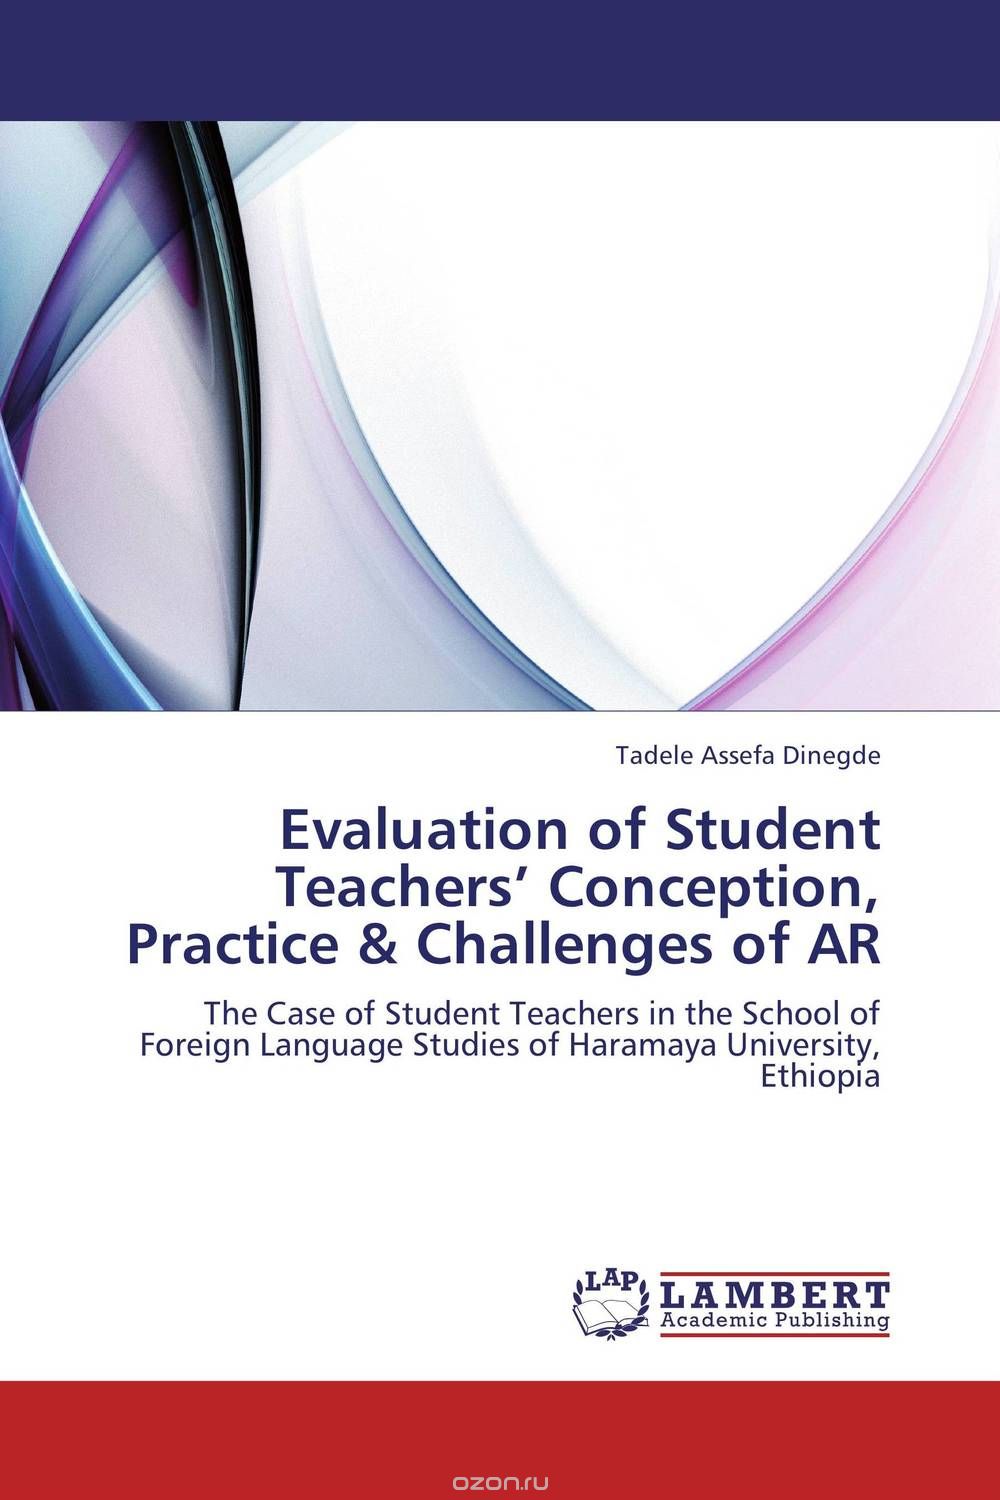 Скачать книгу "Evaluation of Student Teachers’ Conception, Practice & Challenges of AR"